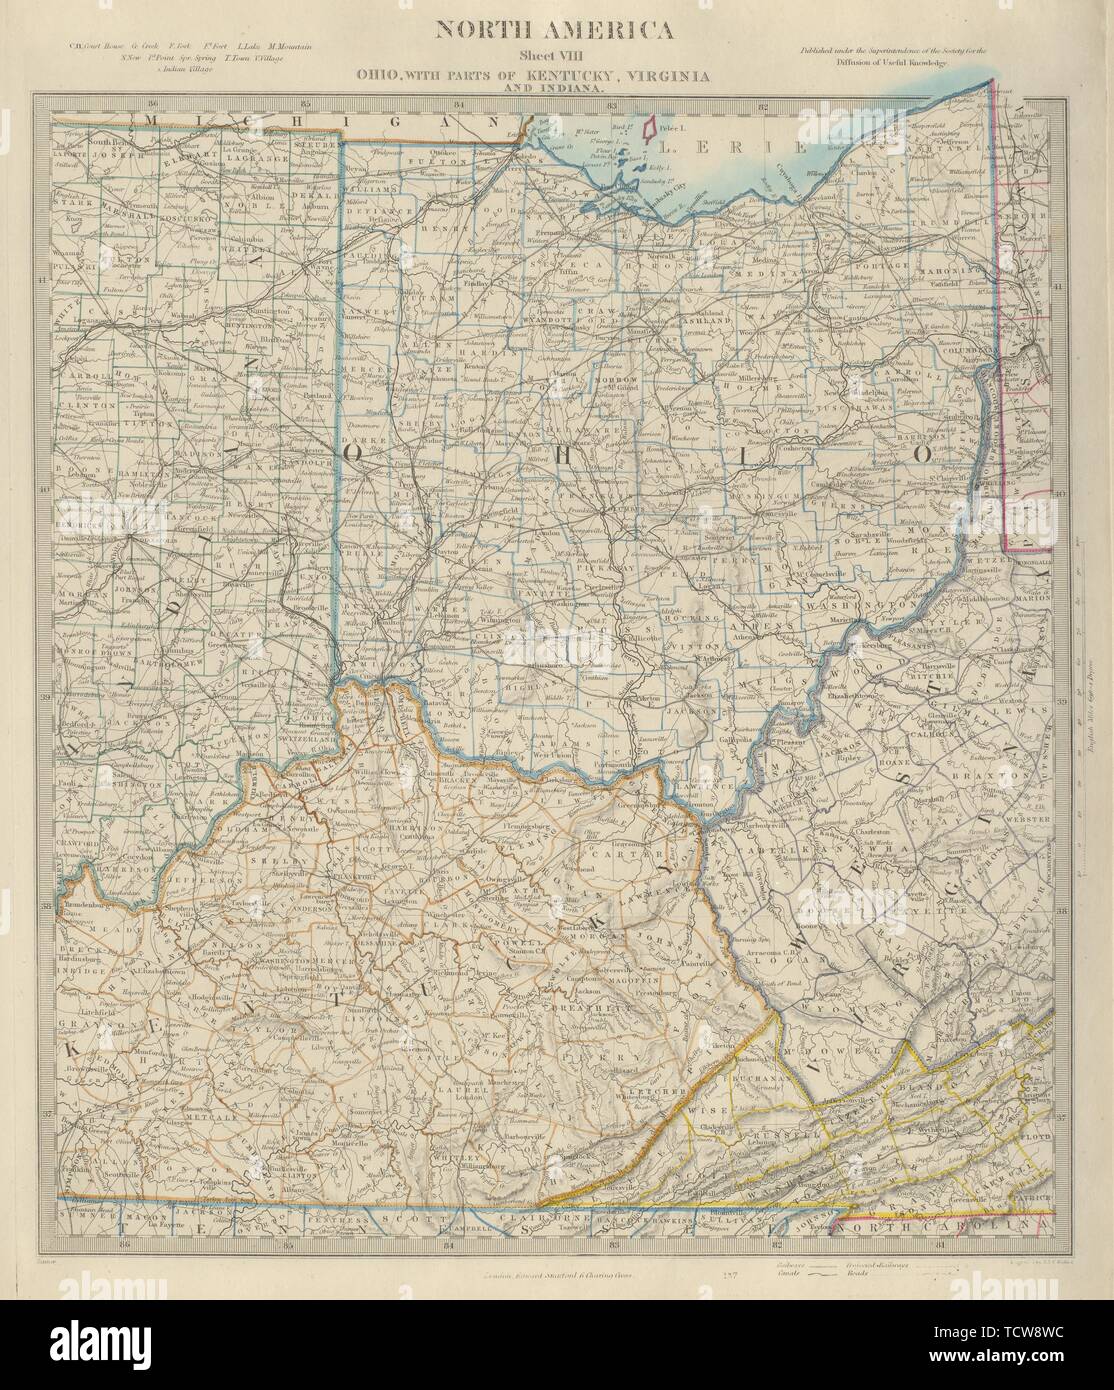 USA. Ohio with parts of Kentucky, Virginia & Indiana. Counties. SDUK 1874 map Stock Photo